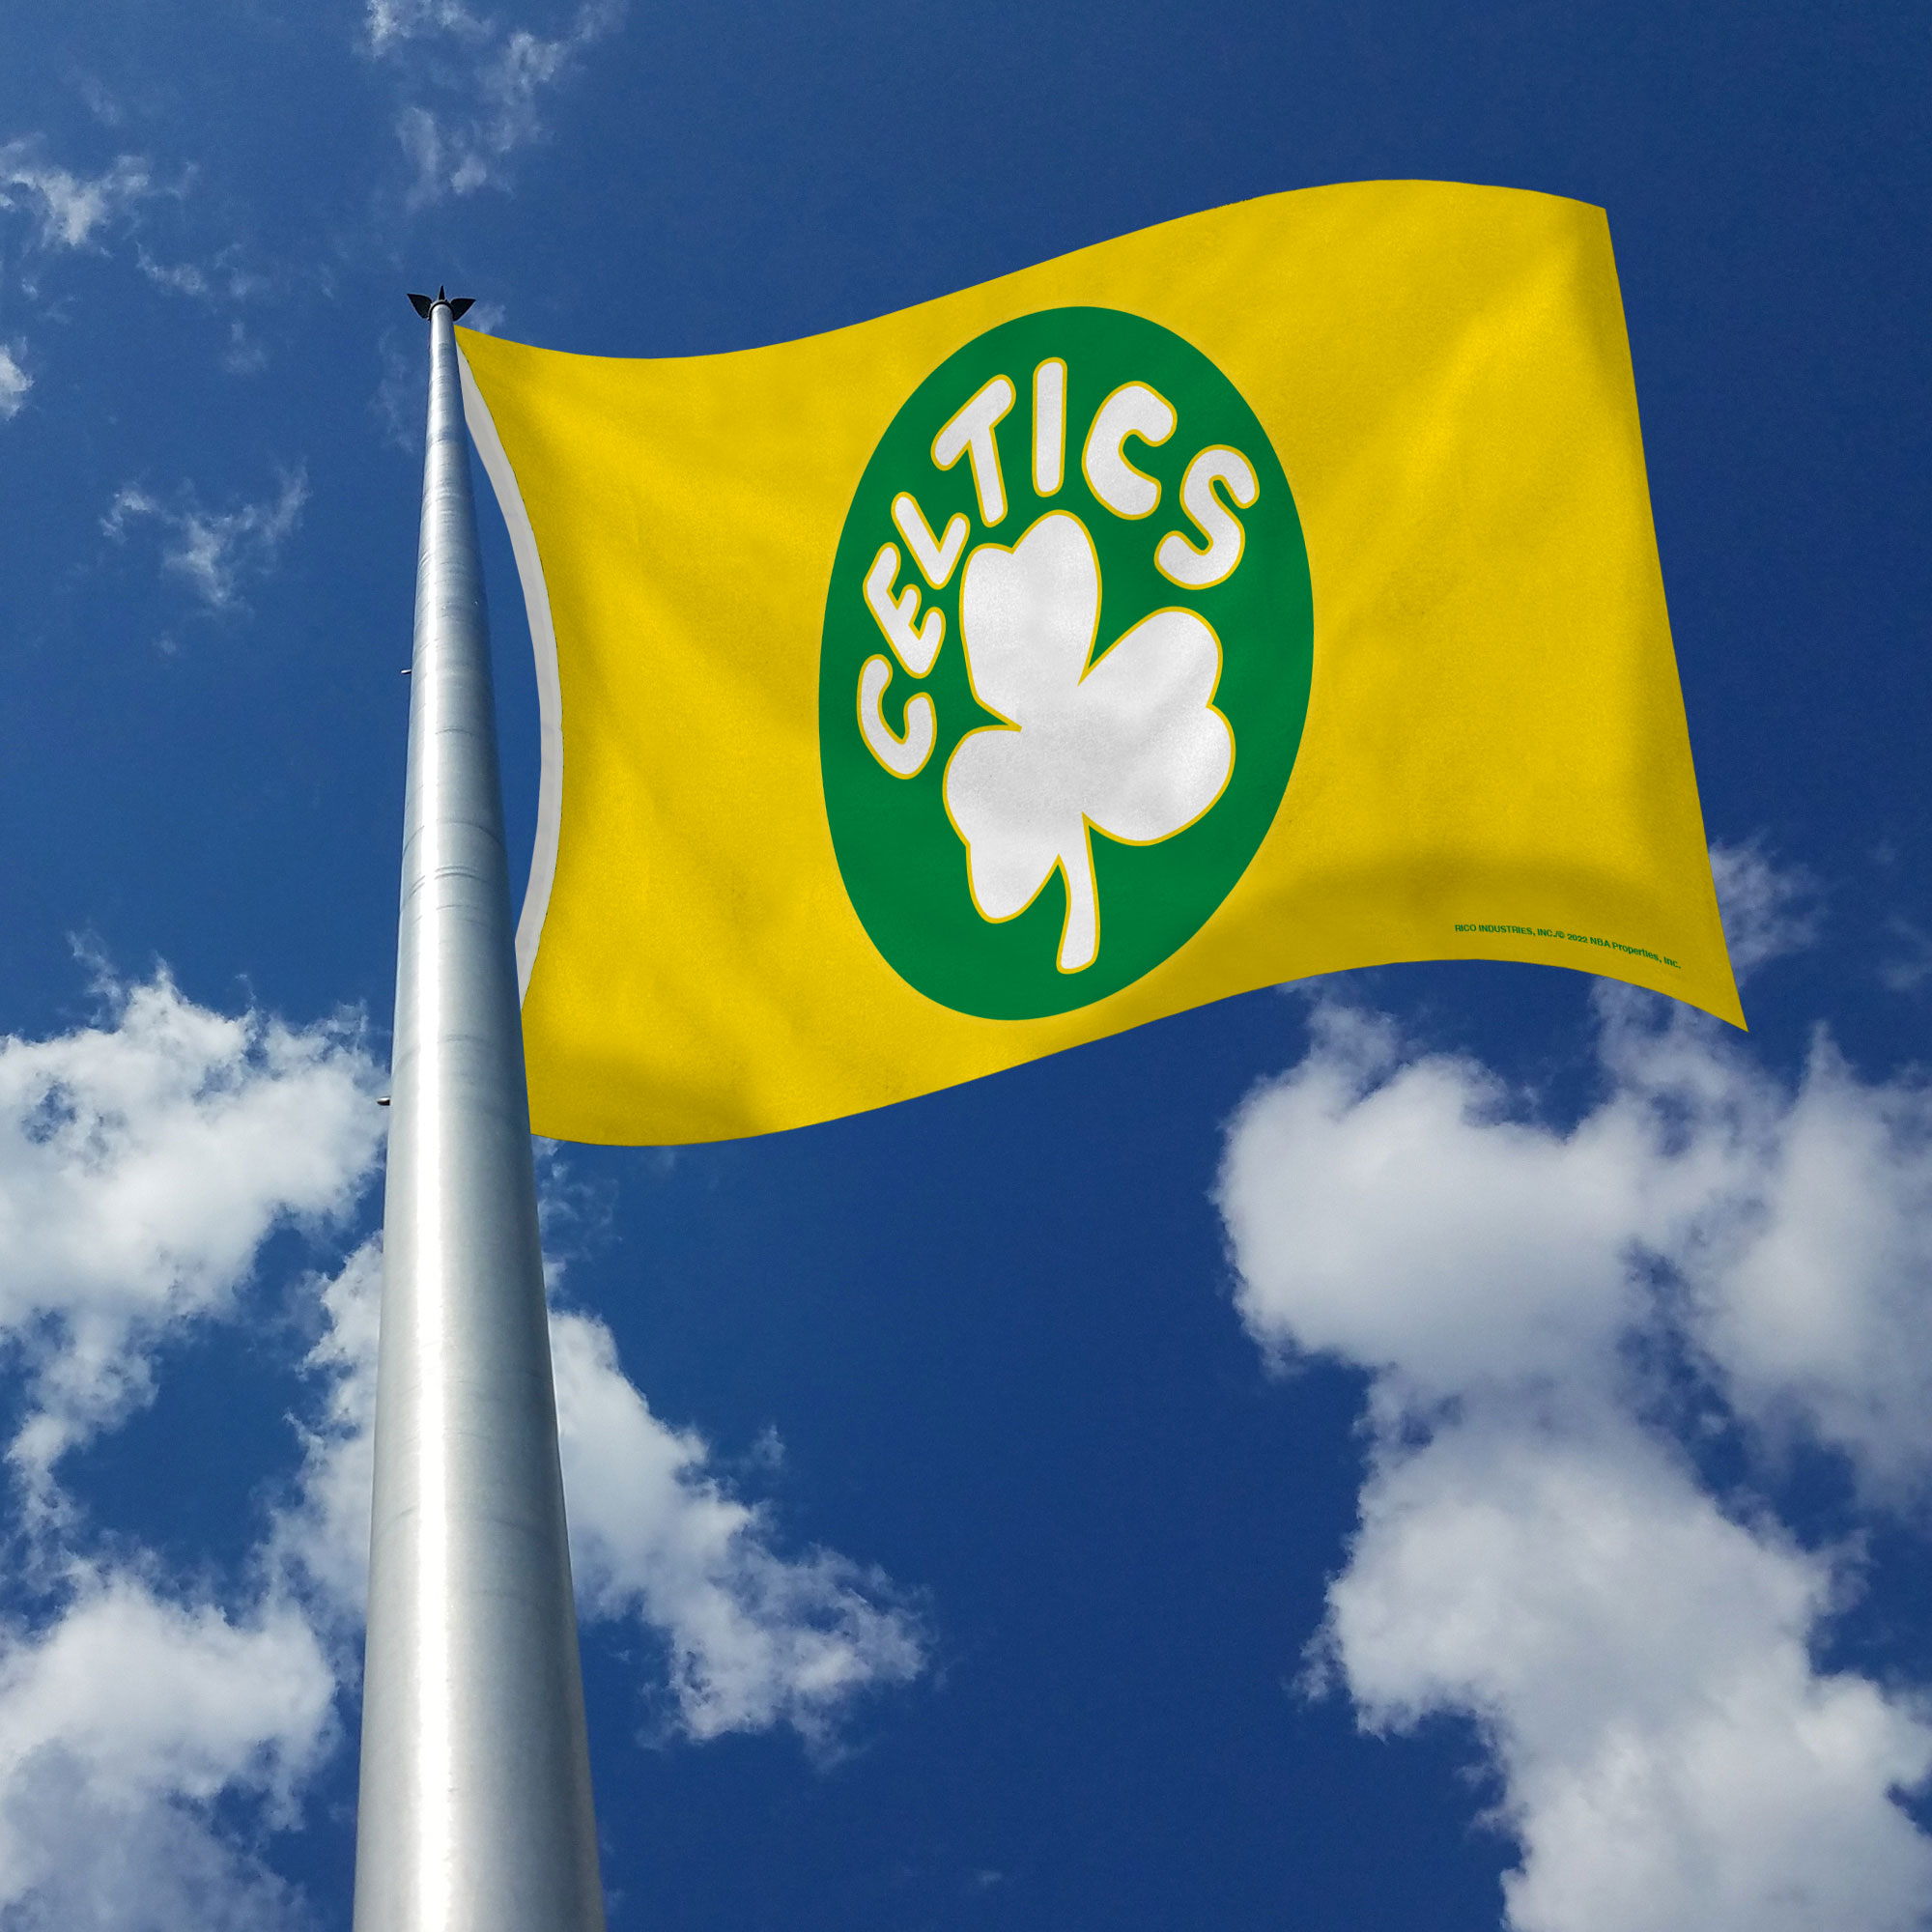 Rico Industries NBA Basketball Boston Celtics Retro - Yellow 3' x 5' Banner Flag